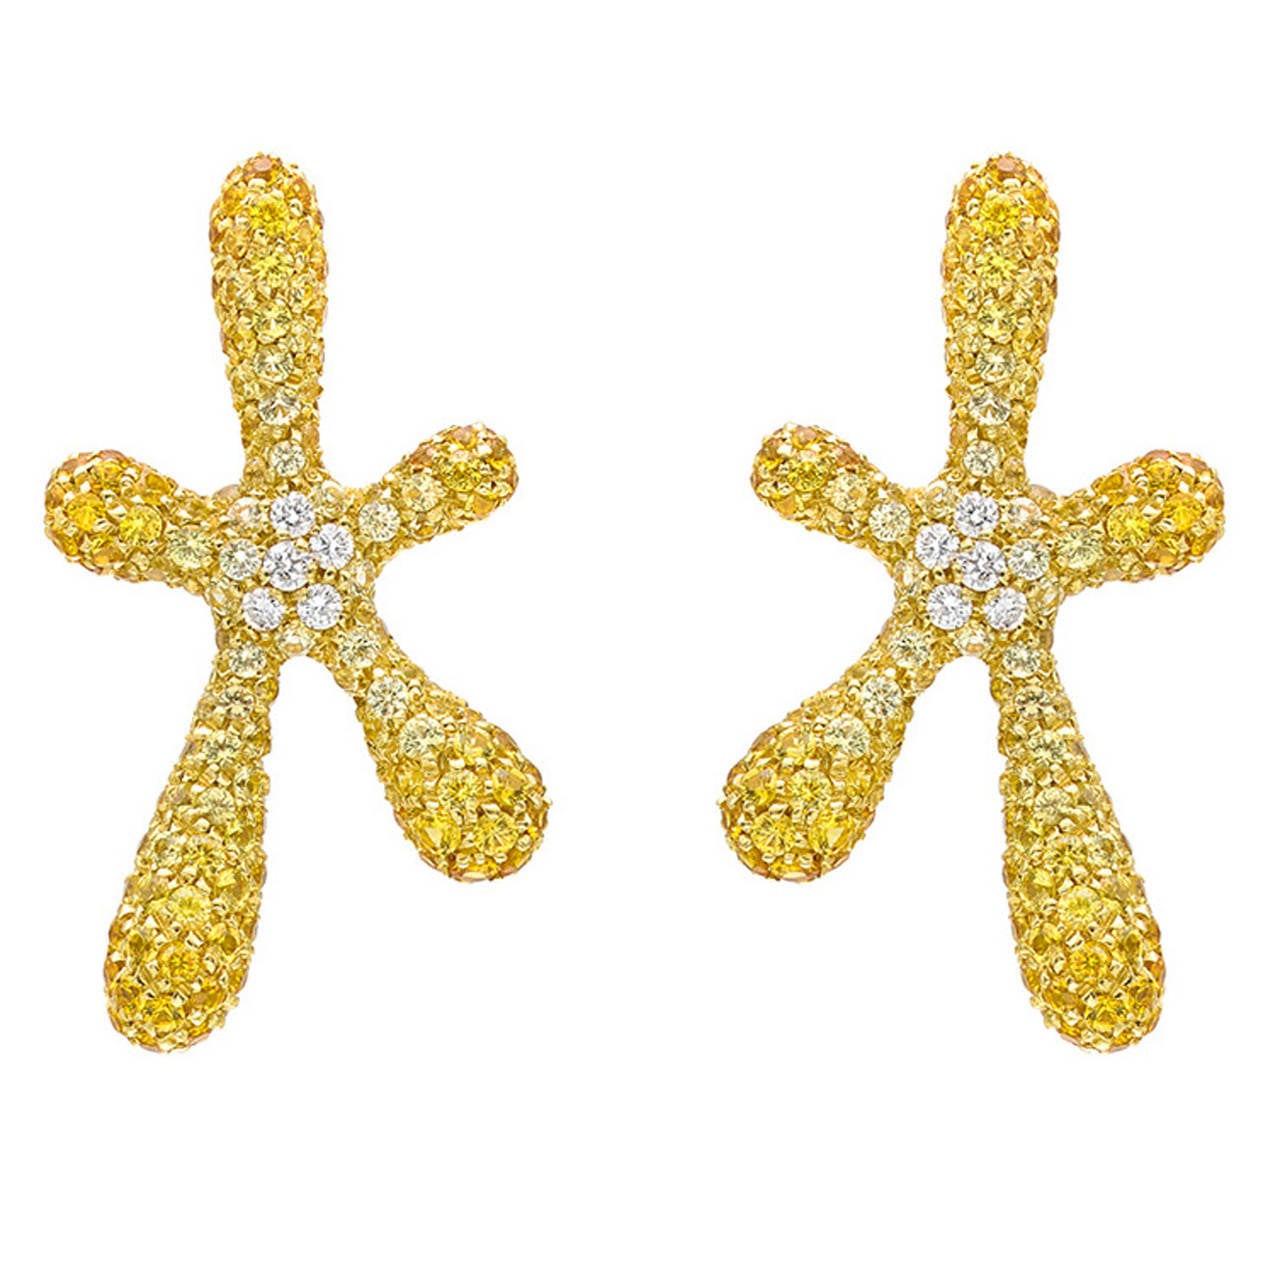 Yellow Sapphire and Diamond Starburst Earrings